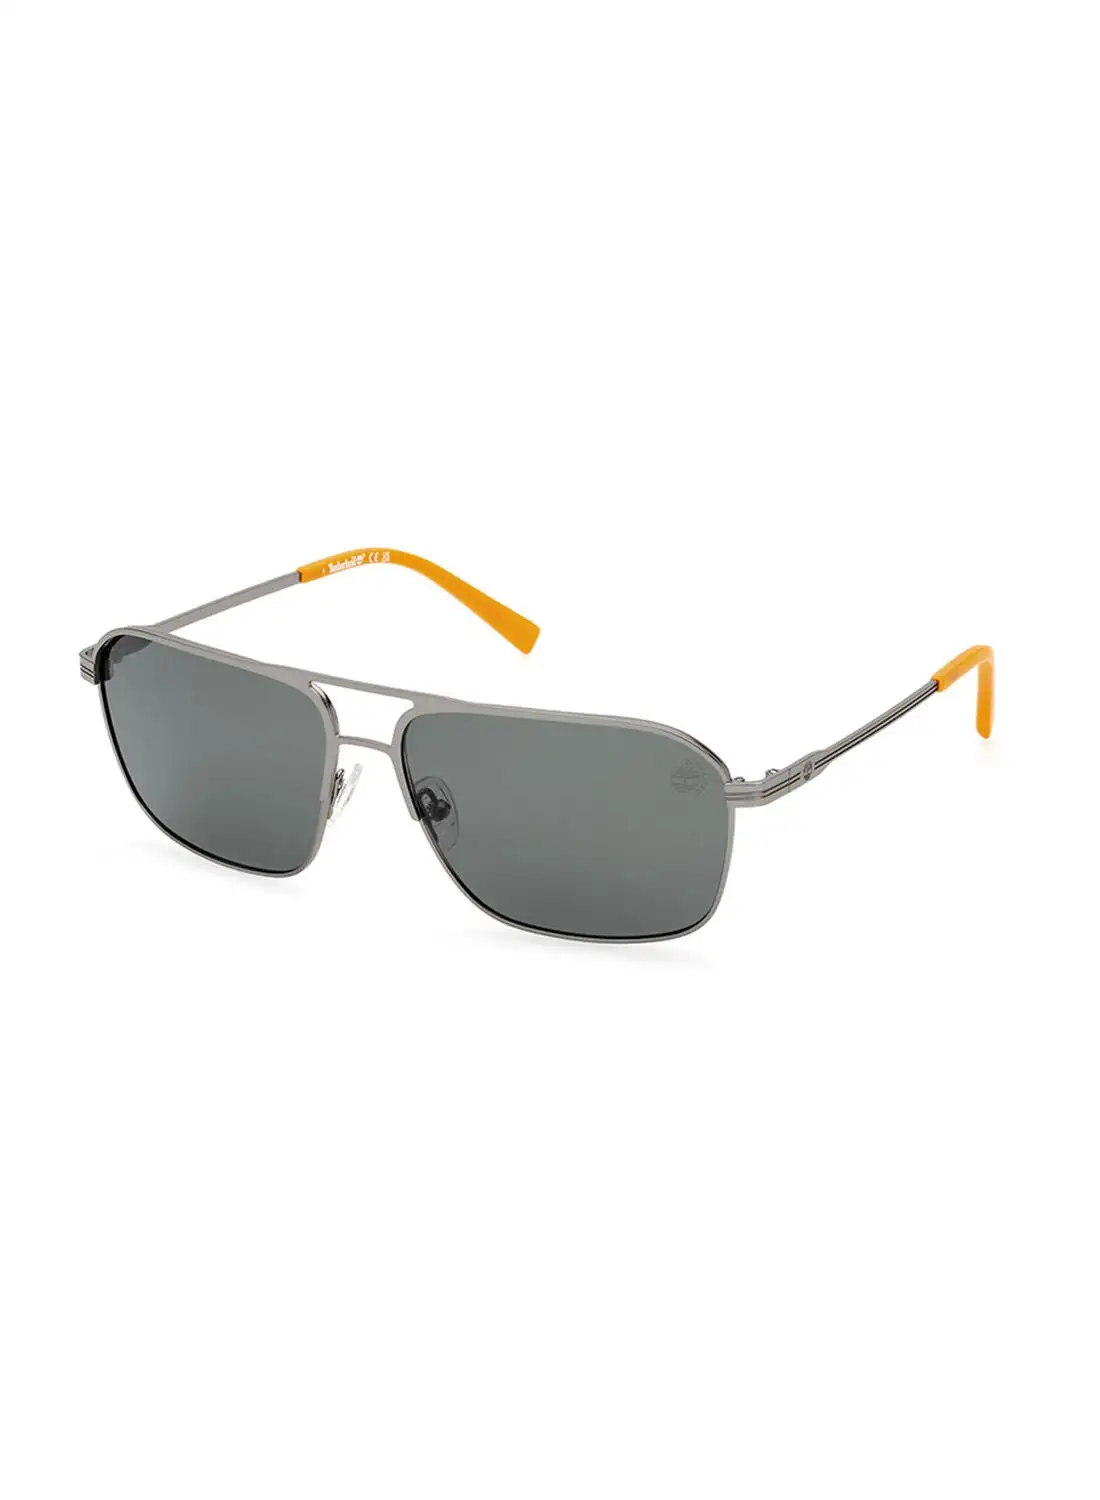 Timberland Sunglasses For Men TB931609R61